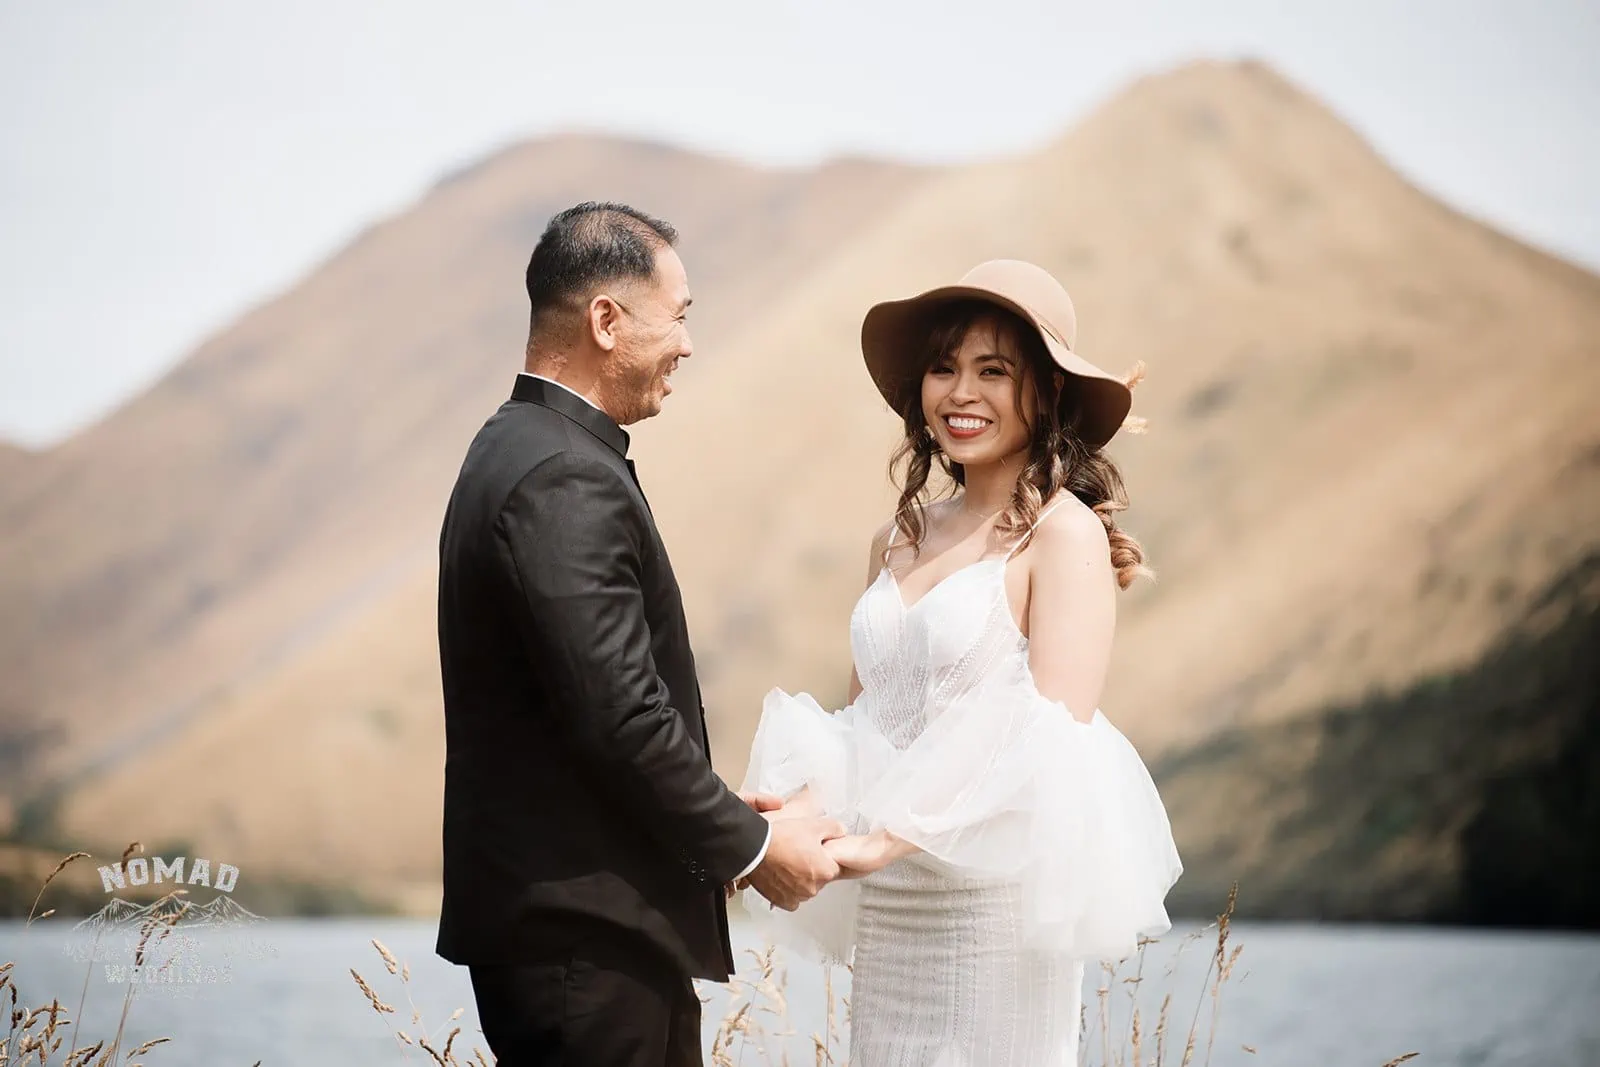 Nhi & Nicholas' Queenstown NZ Cecil Peak Pre-Wedding Shoot by the lake.